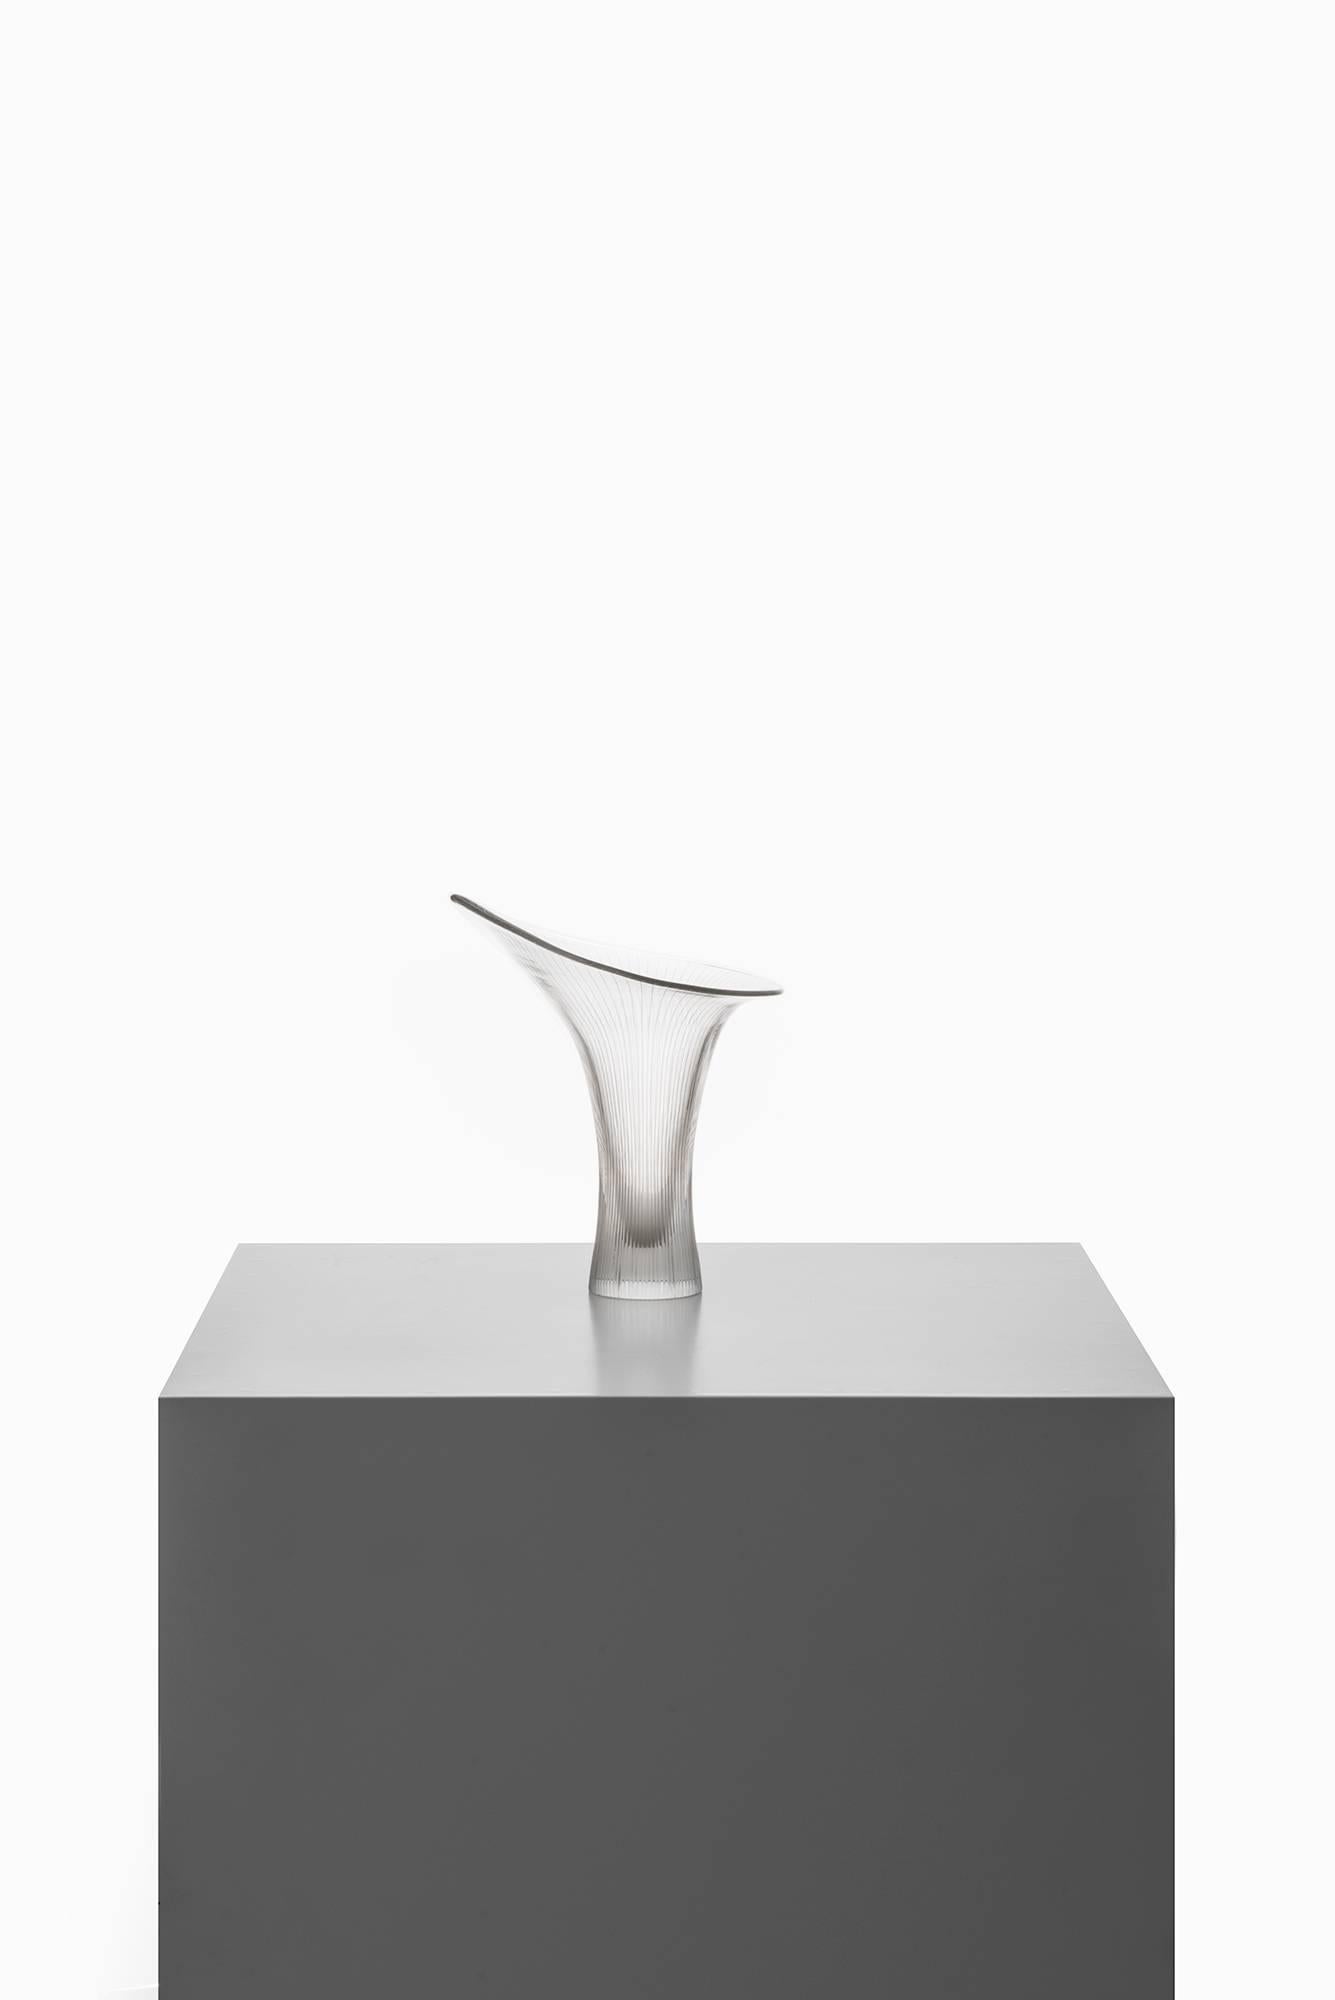 Rare Kantarelli glass vase designed by Tapio Wirkkala. Produced by Iittala in Finland.